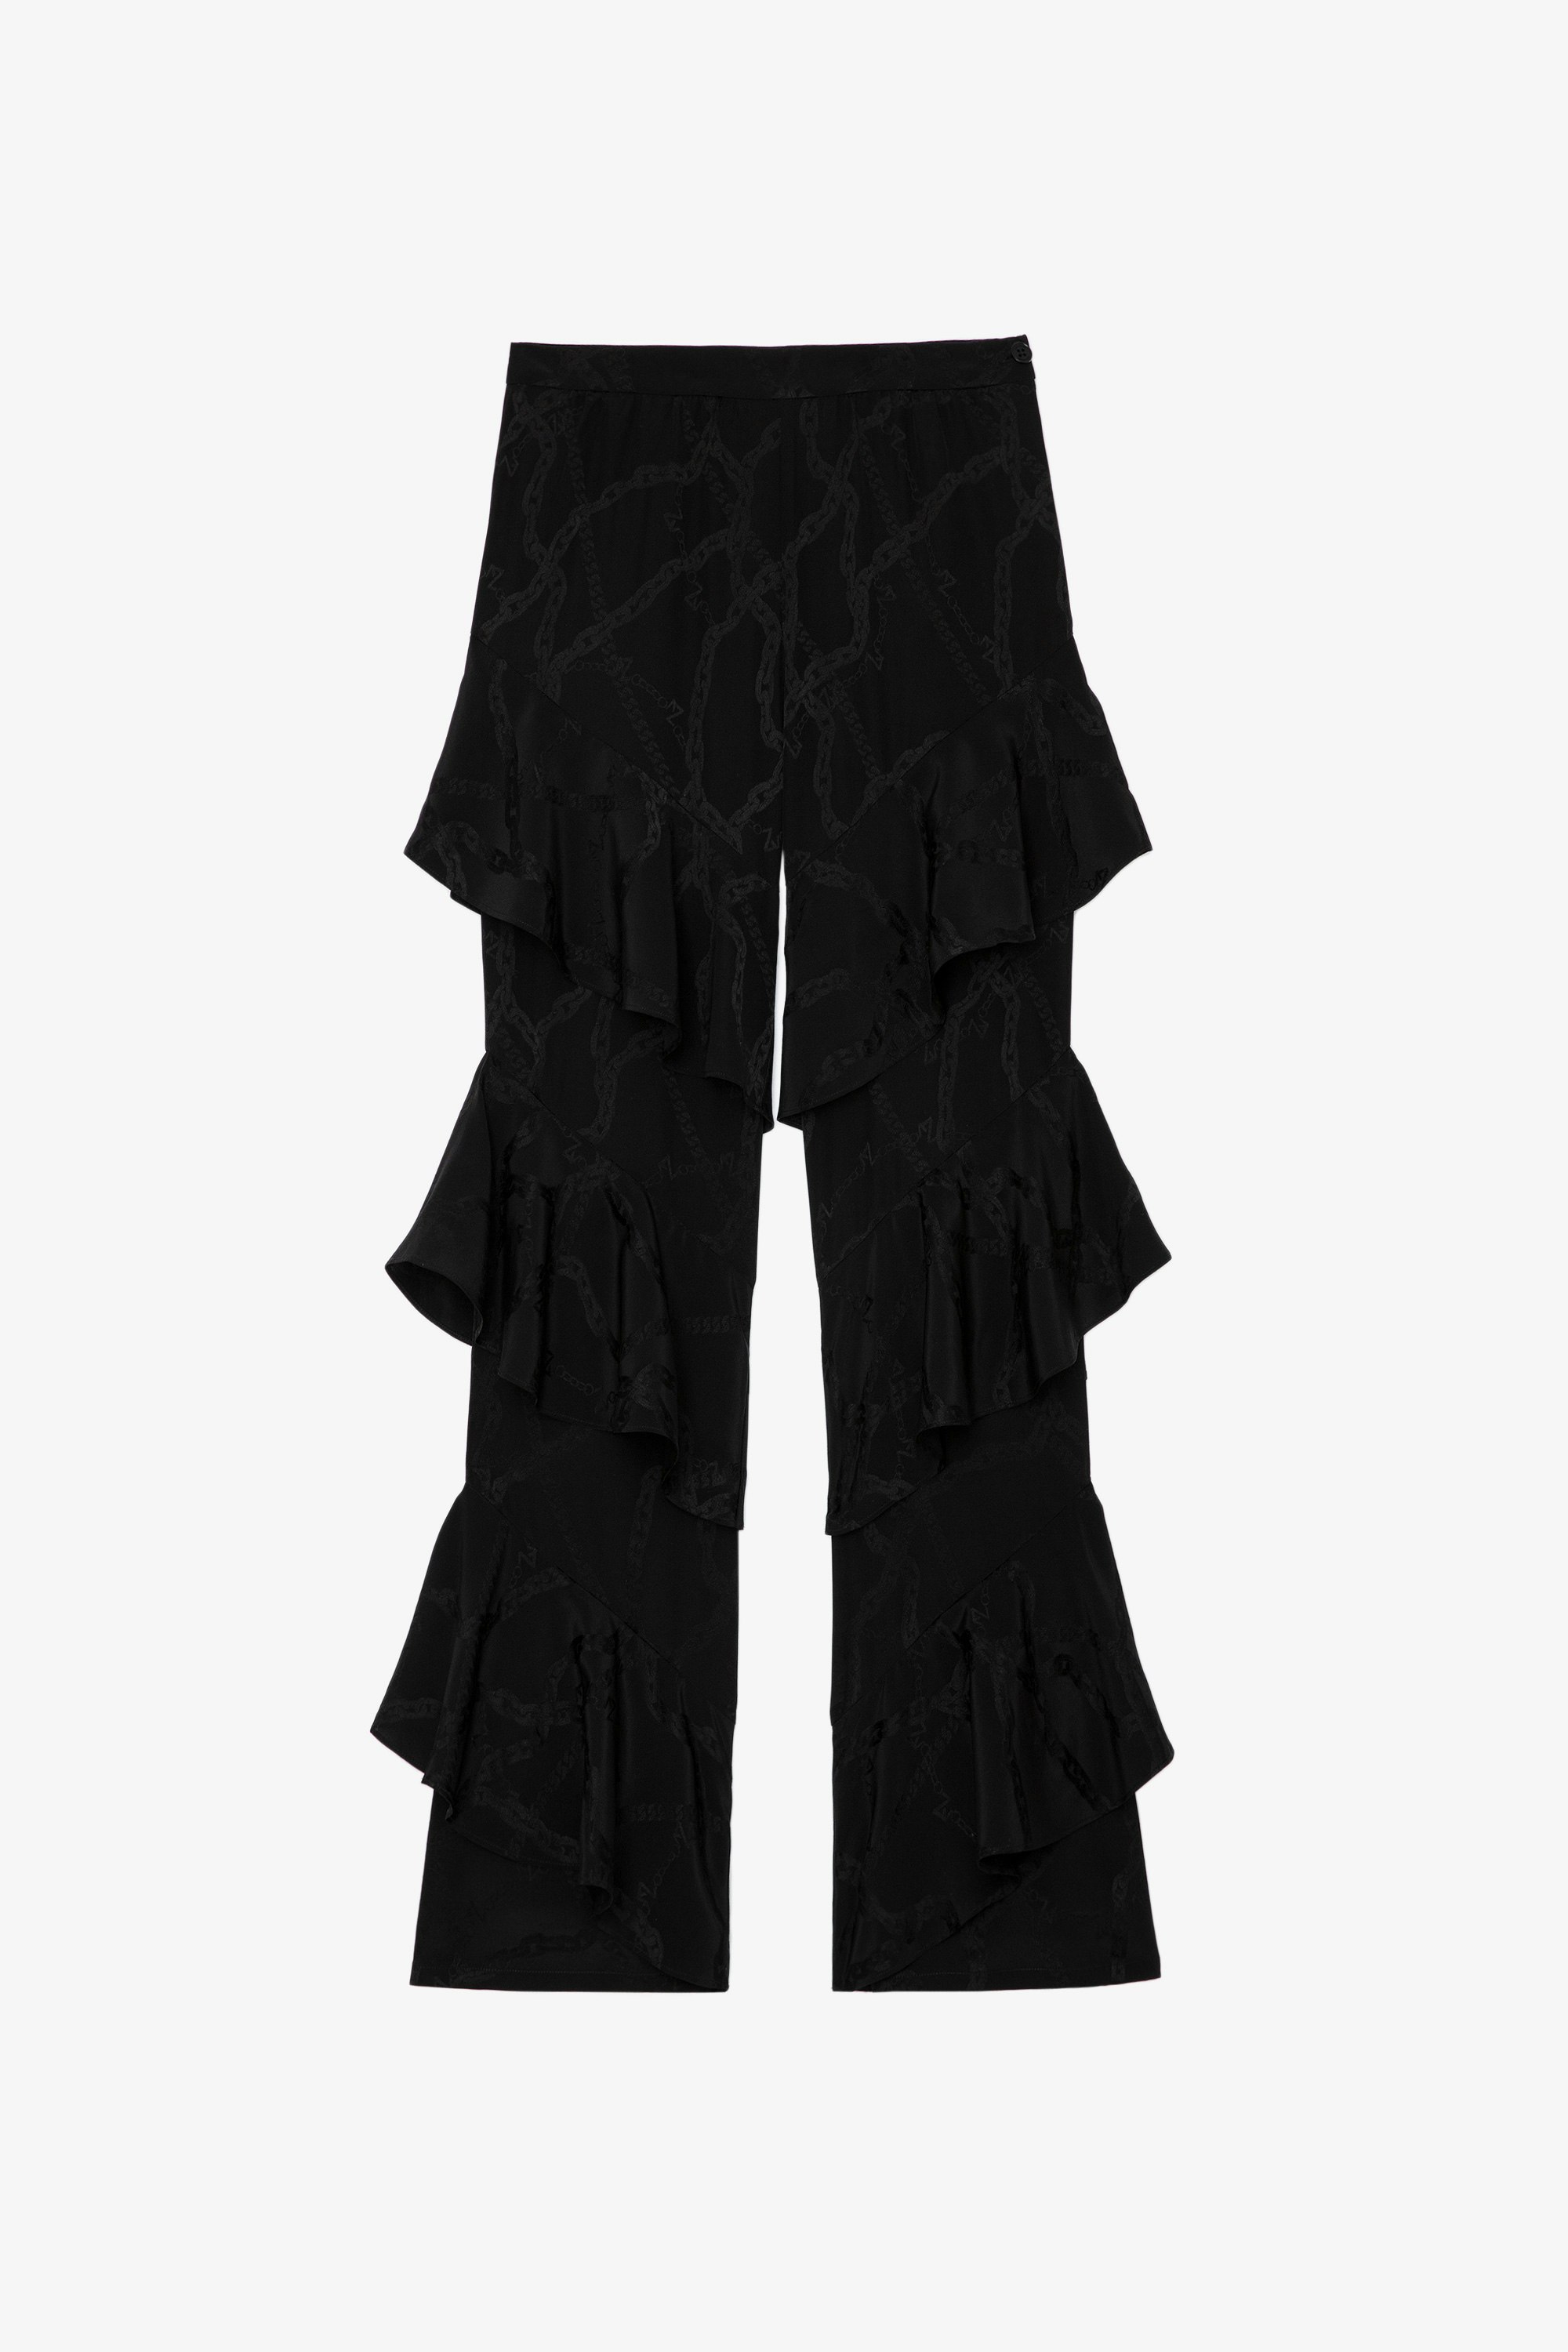 Pantaloni Poum Chaines in seta Pantaloni in seta nera con balze e catene jacquard ZV donna 